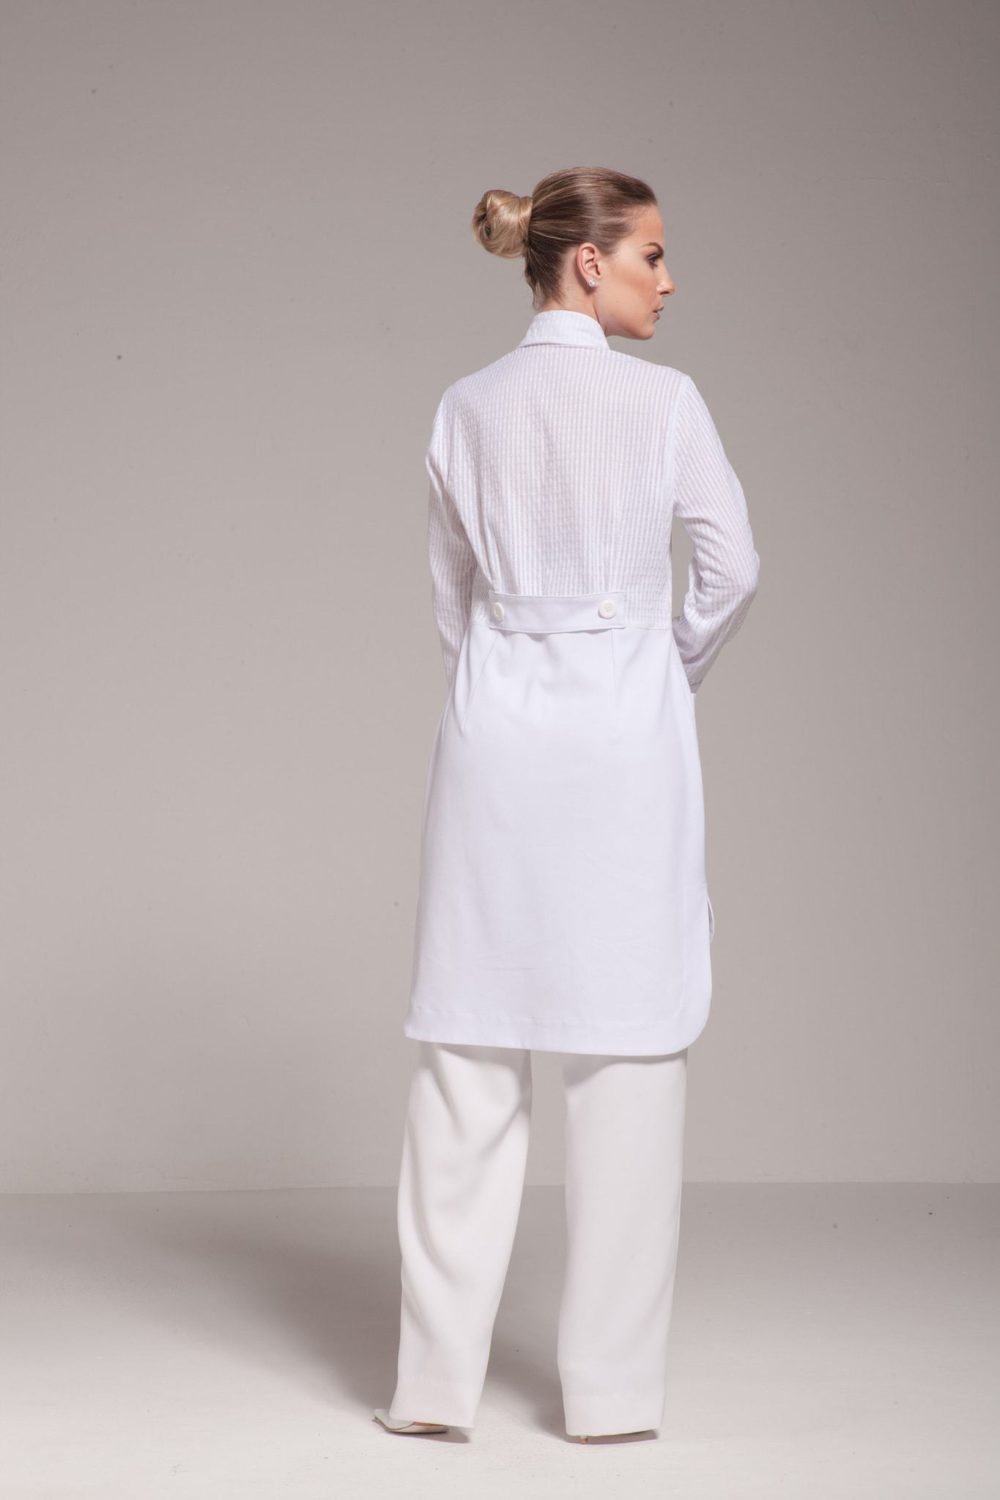 Jaleco Premium Lucy: Gola camisa, abotoamento invisivel